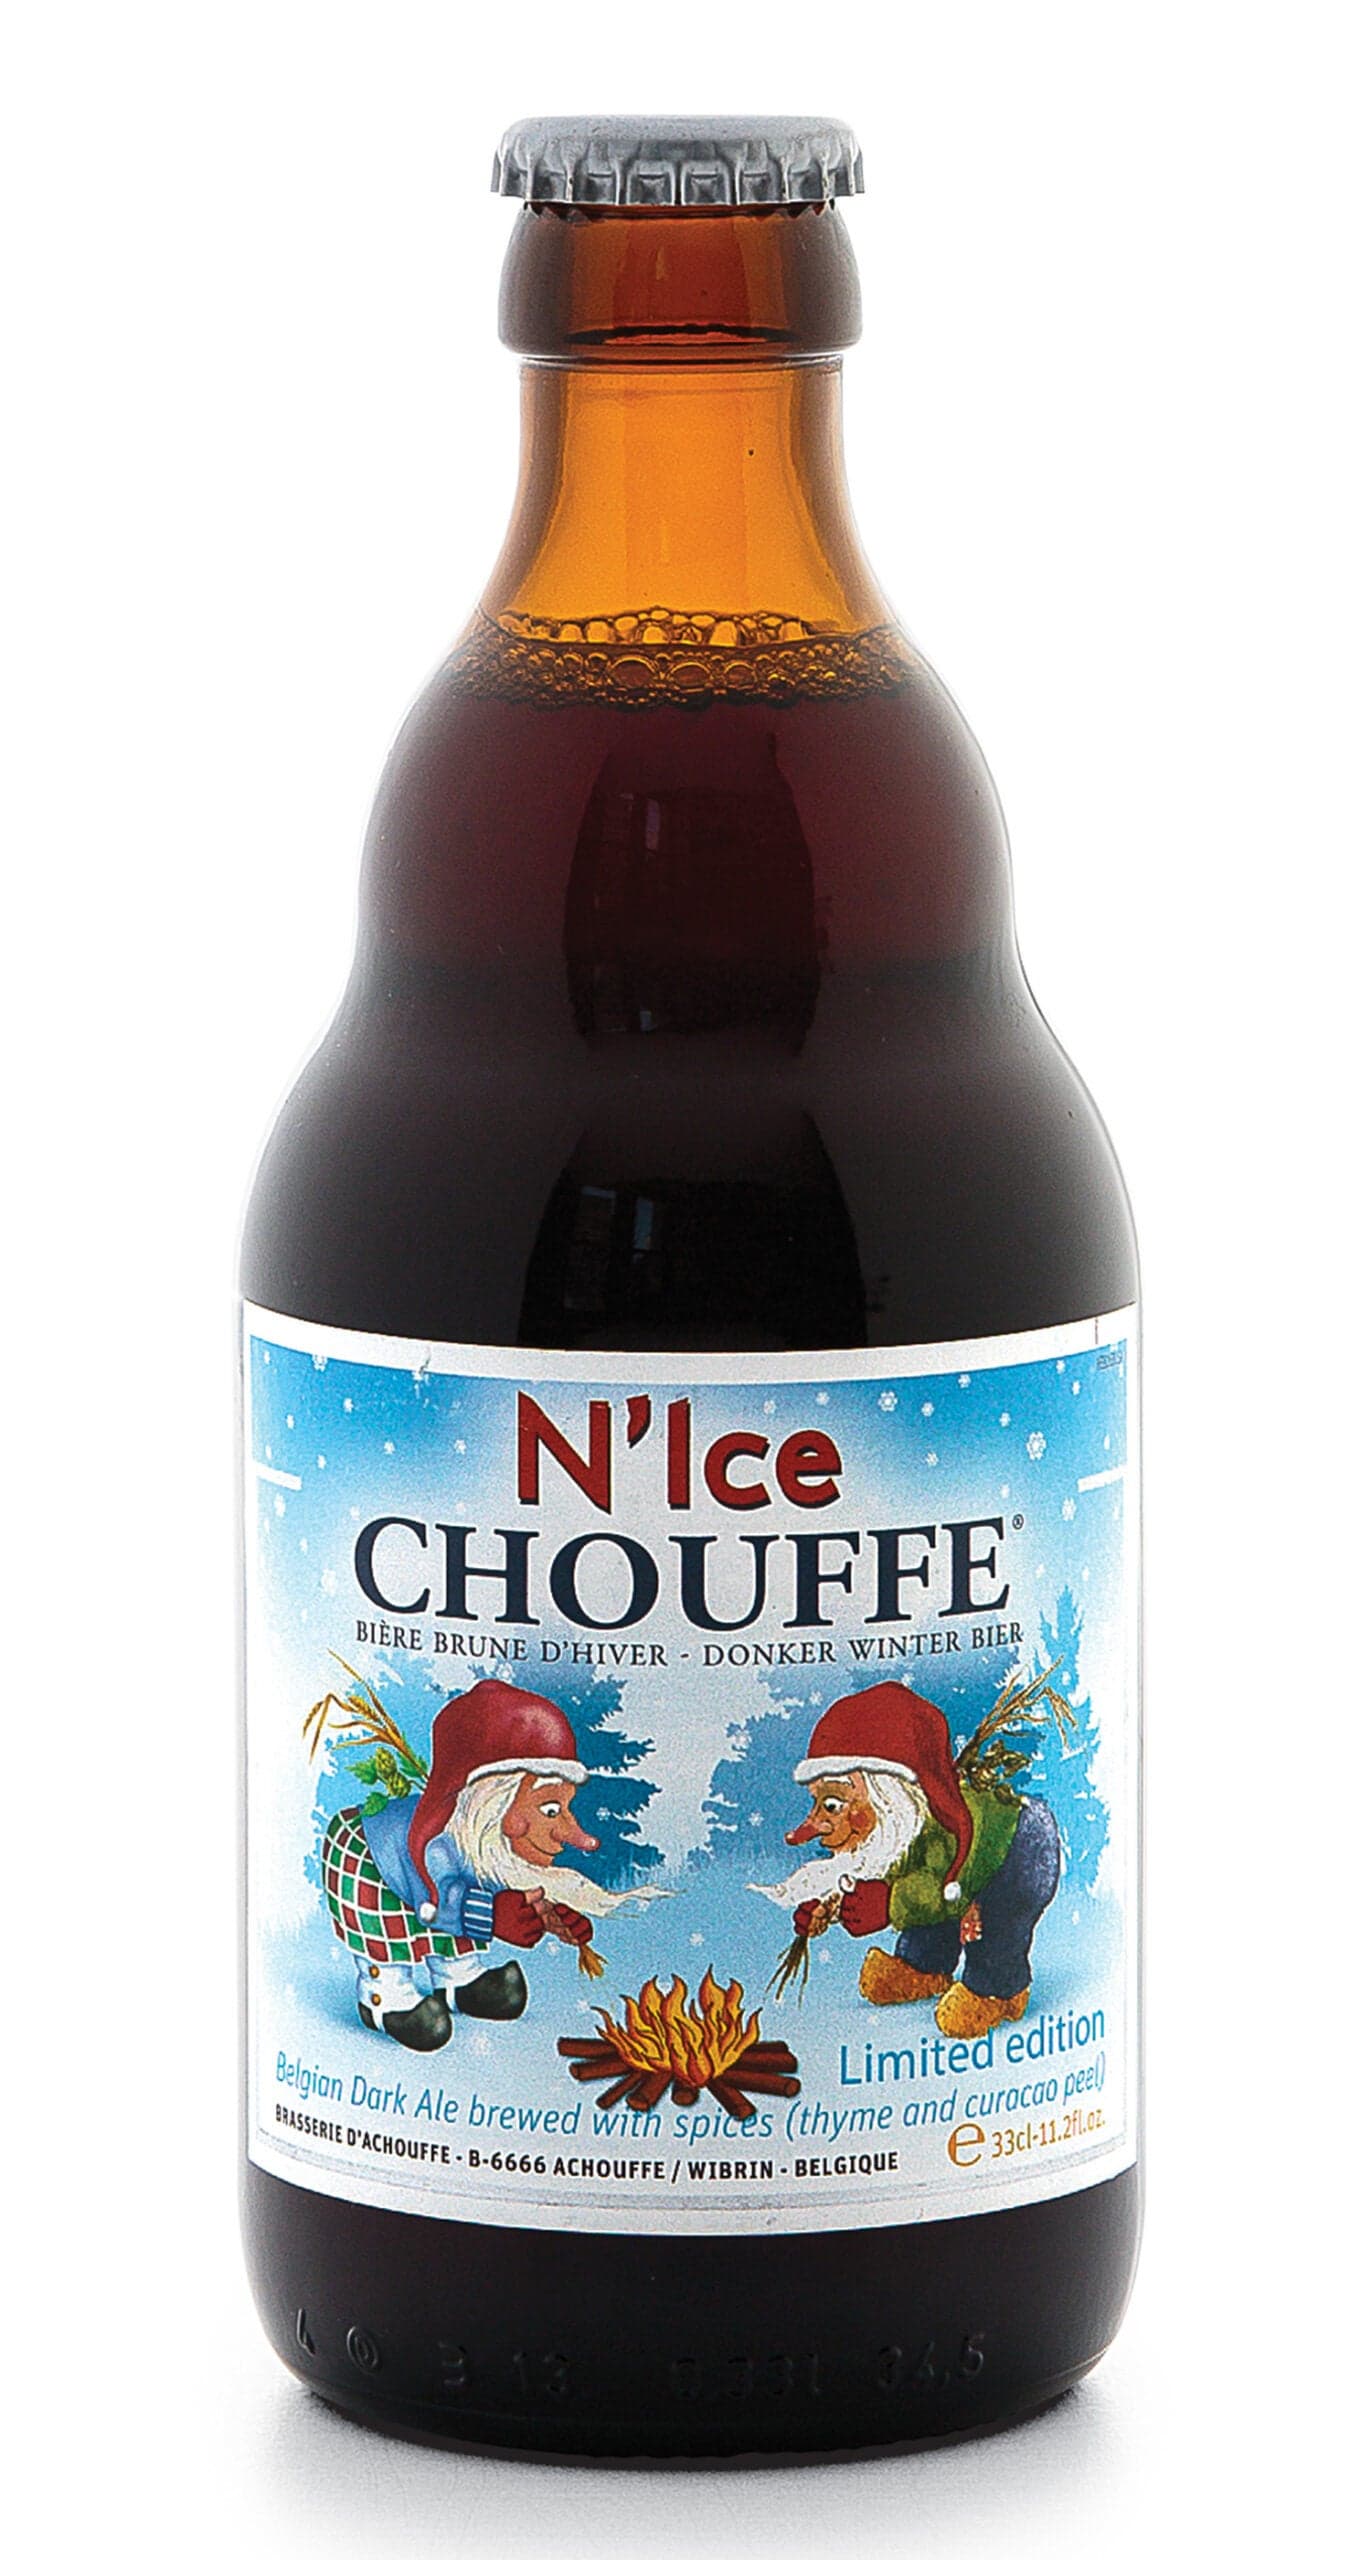 D'Achouffe N'Ice Chouffe Holiday Beer